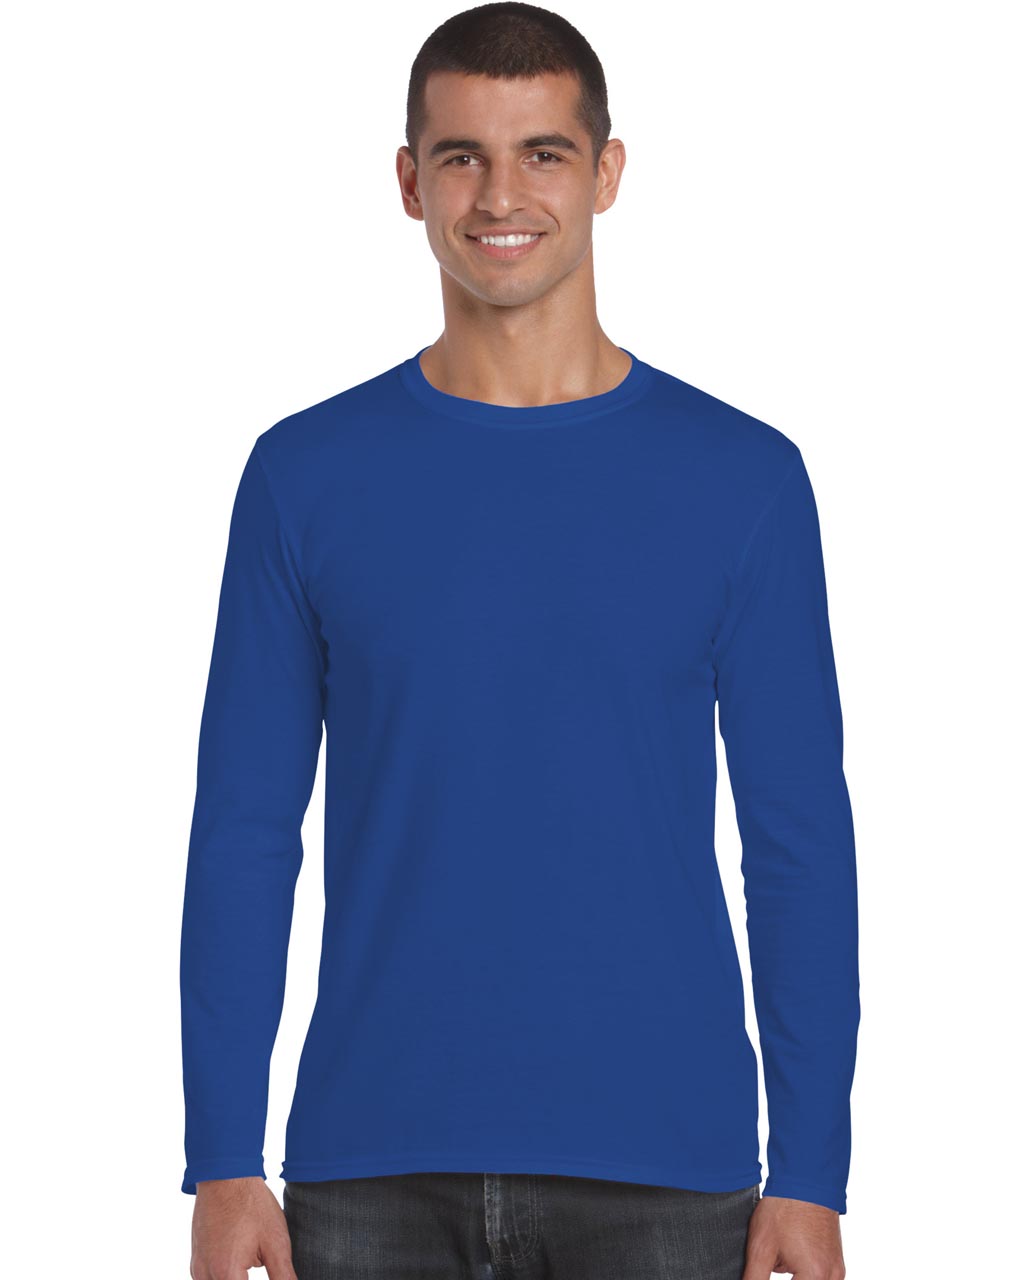 Gildan Softstyle® Adult Long Sleeve T-shirt - Gildan Softstyle® Adult Long Sleeve T-shirt - Royal